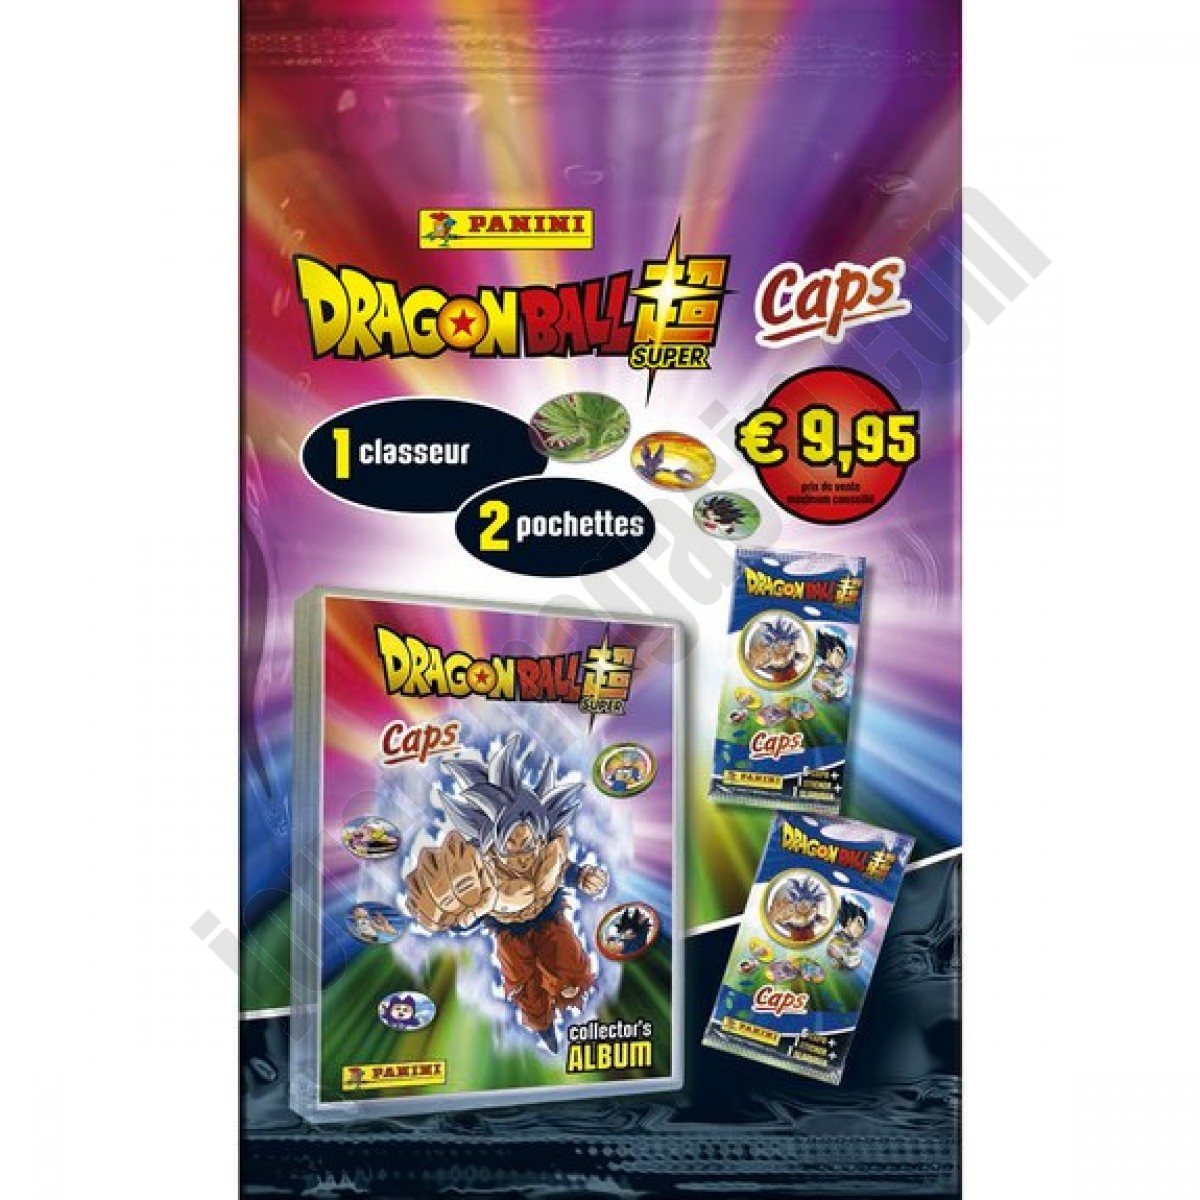 Panini - Caps Dragon Ball Super Starter Pack ◆◆◆ Nouveau - Panini - Caps Dragon Ball Super Starter Pack ◆◆◆ Nouveau